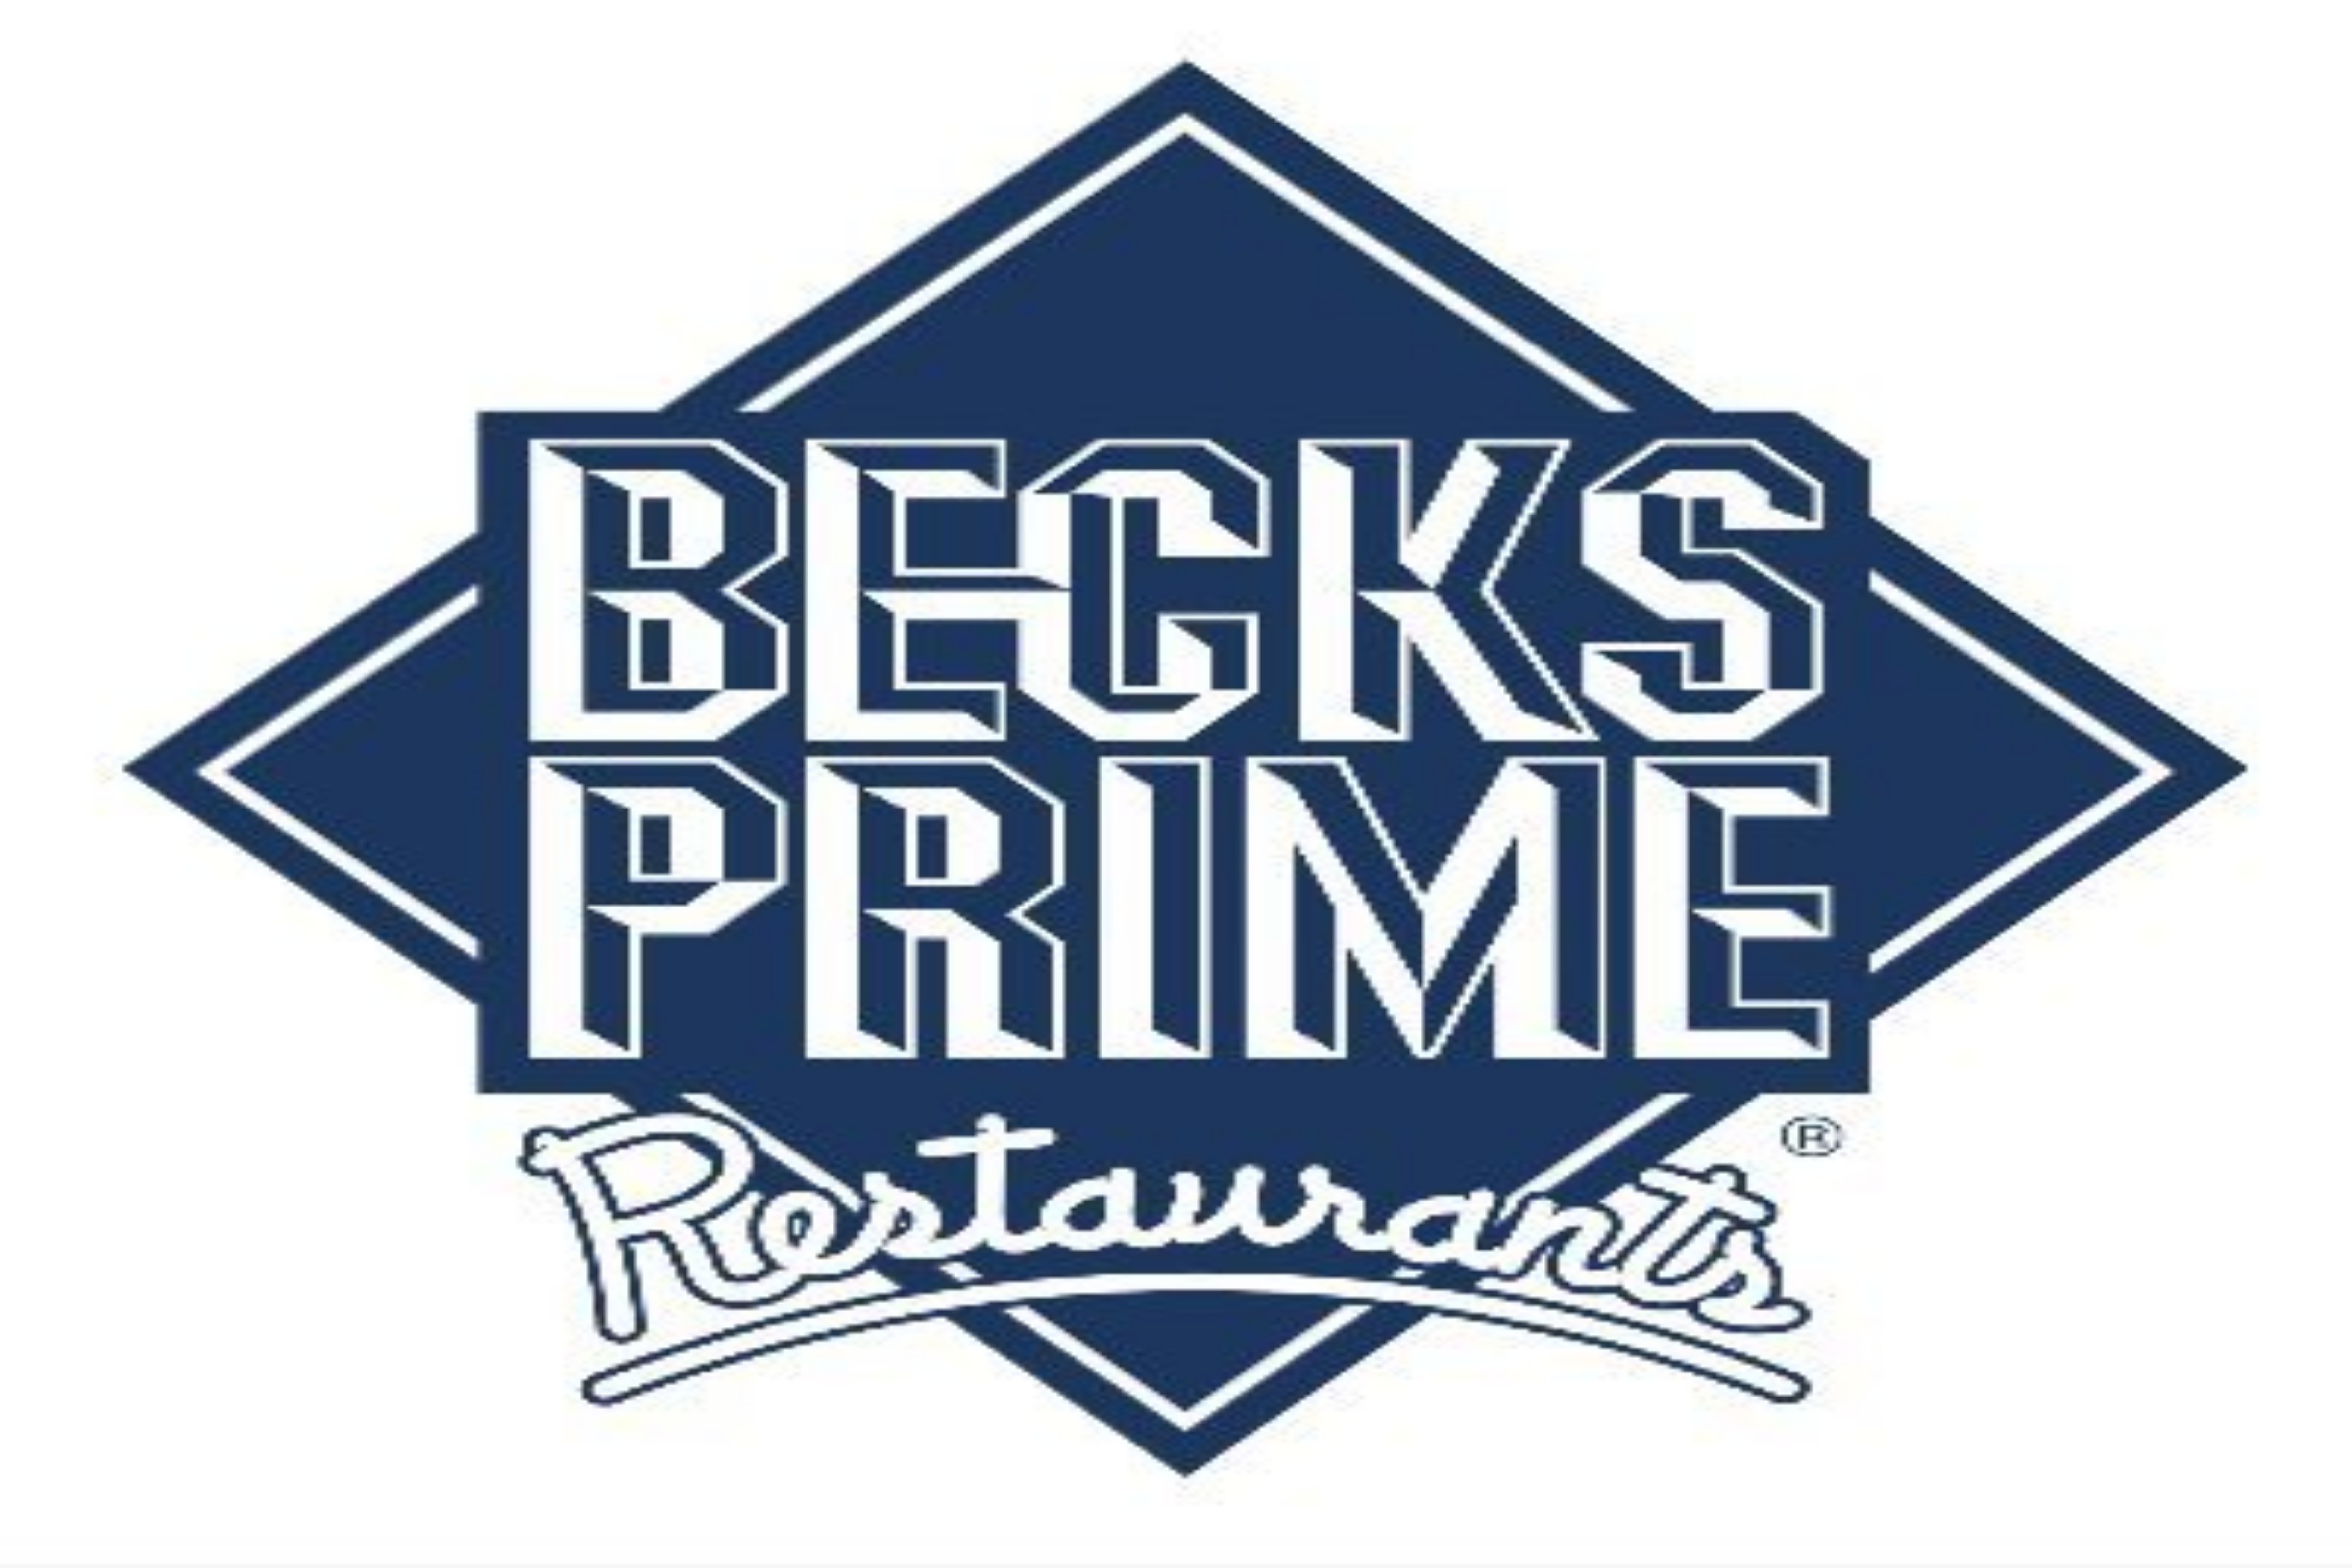 Becks Prime Restaurants w PIN